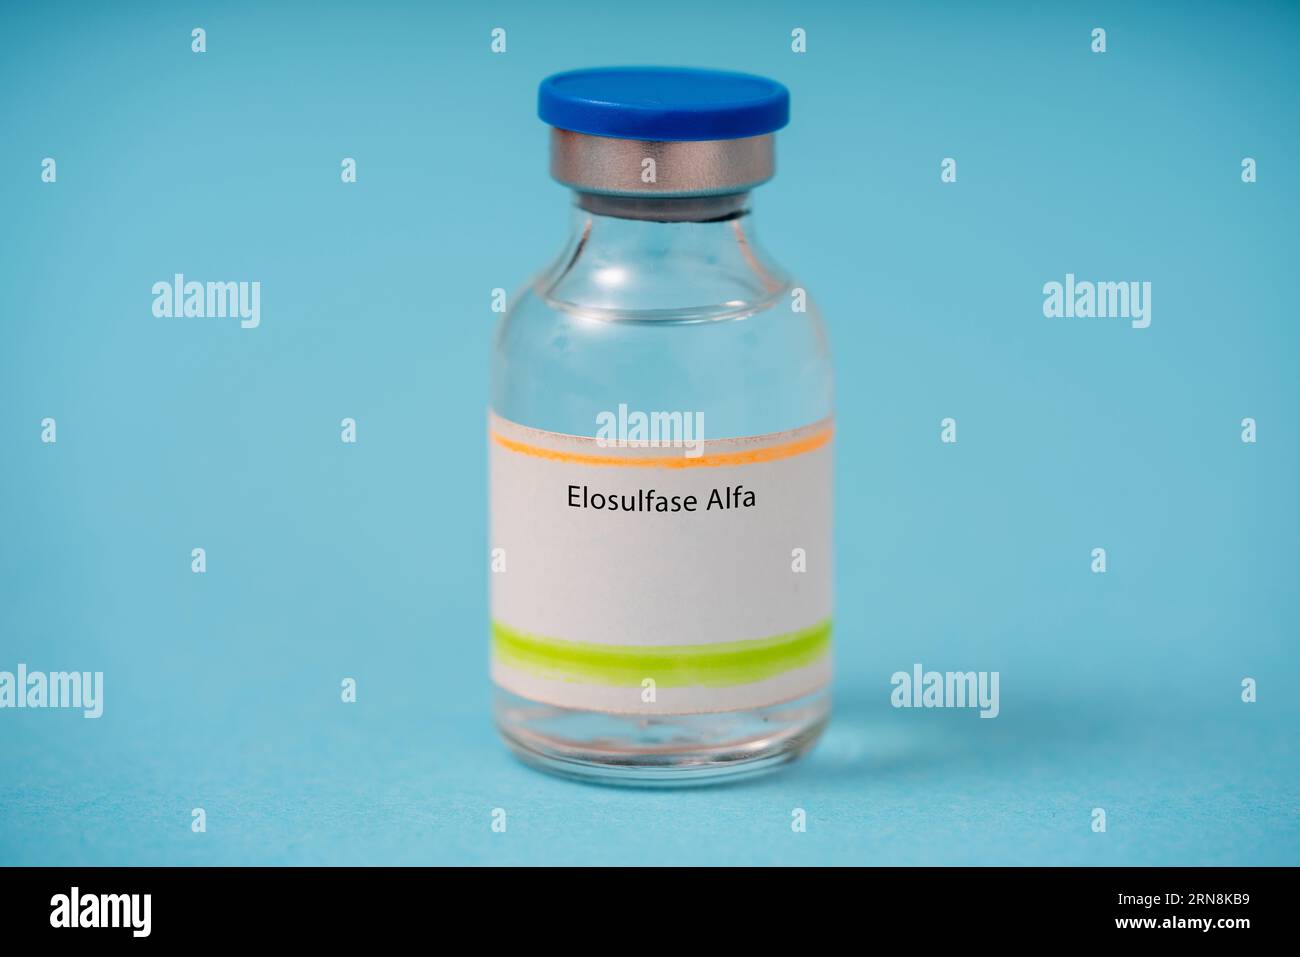 Elosulfase Alfa, Medication used to treat certain types of mucopolysaccharidosis medical drug concept Stock Photo